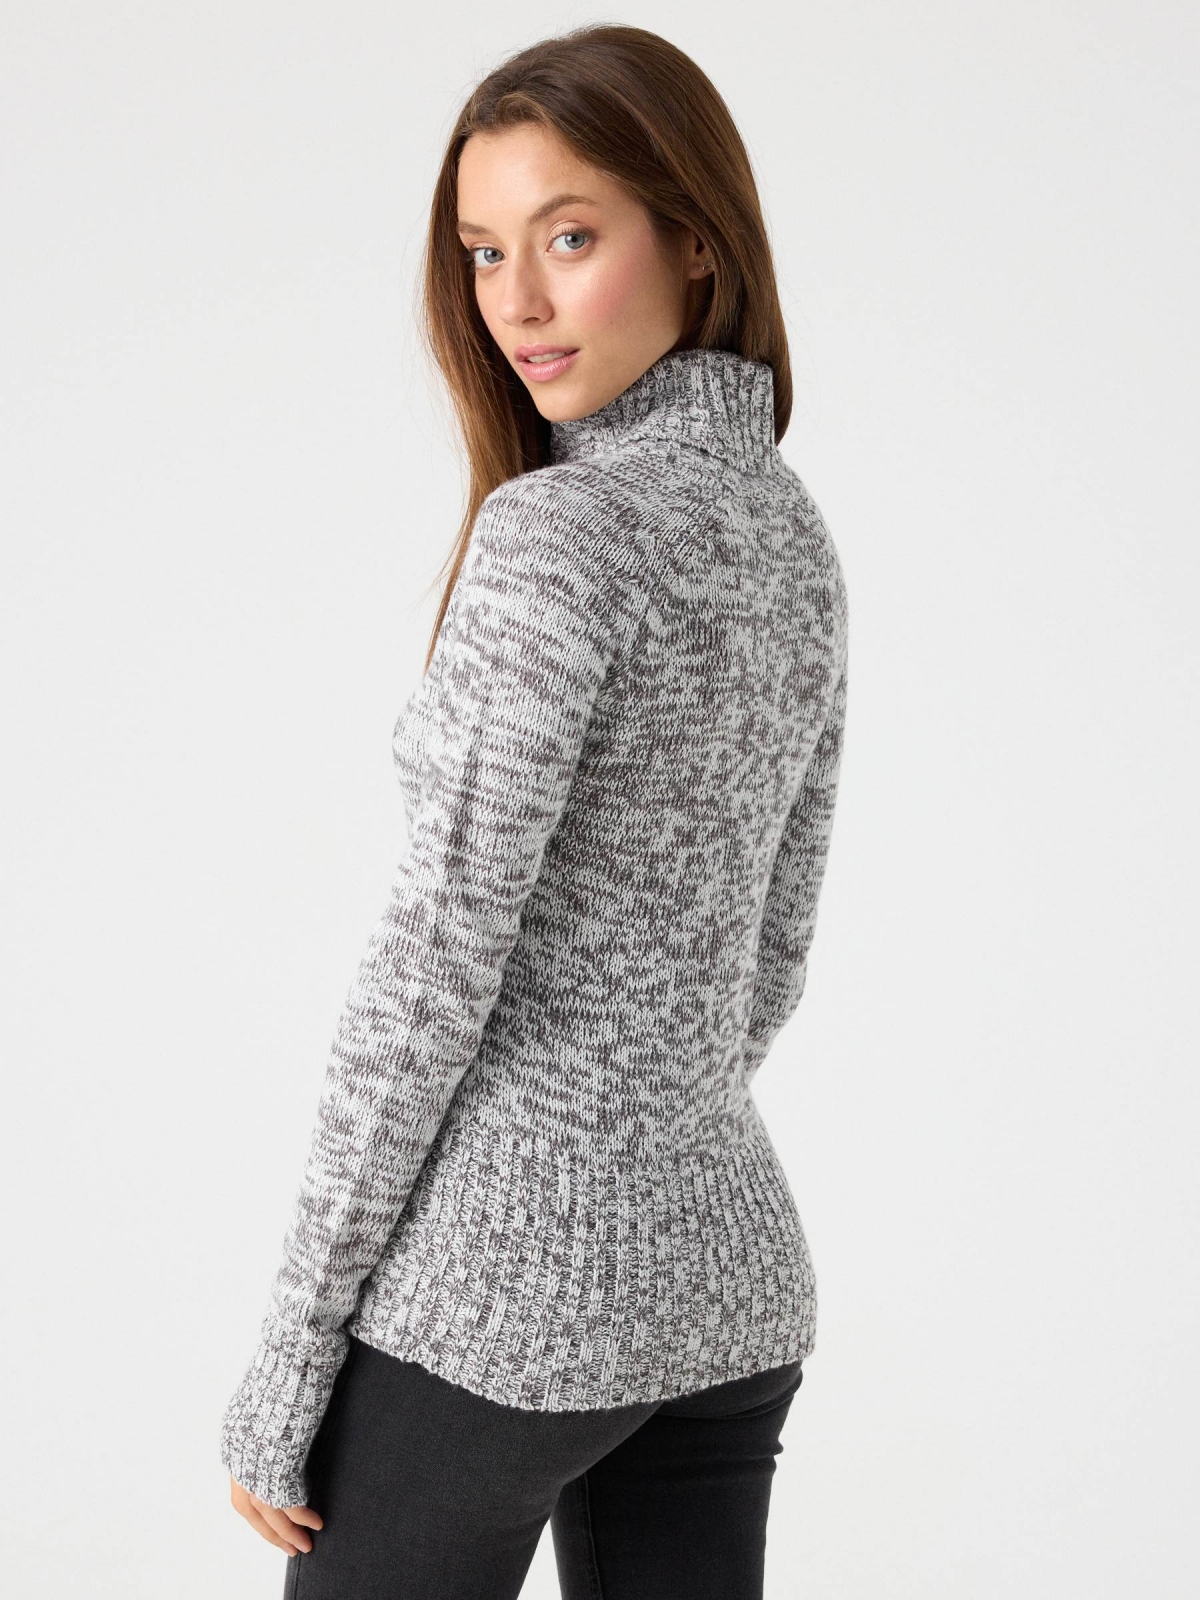 Fleece turtleneck sweater melange grey middle back view